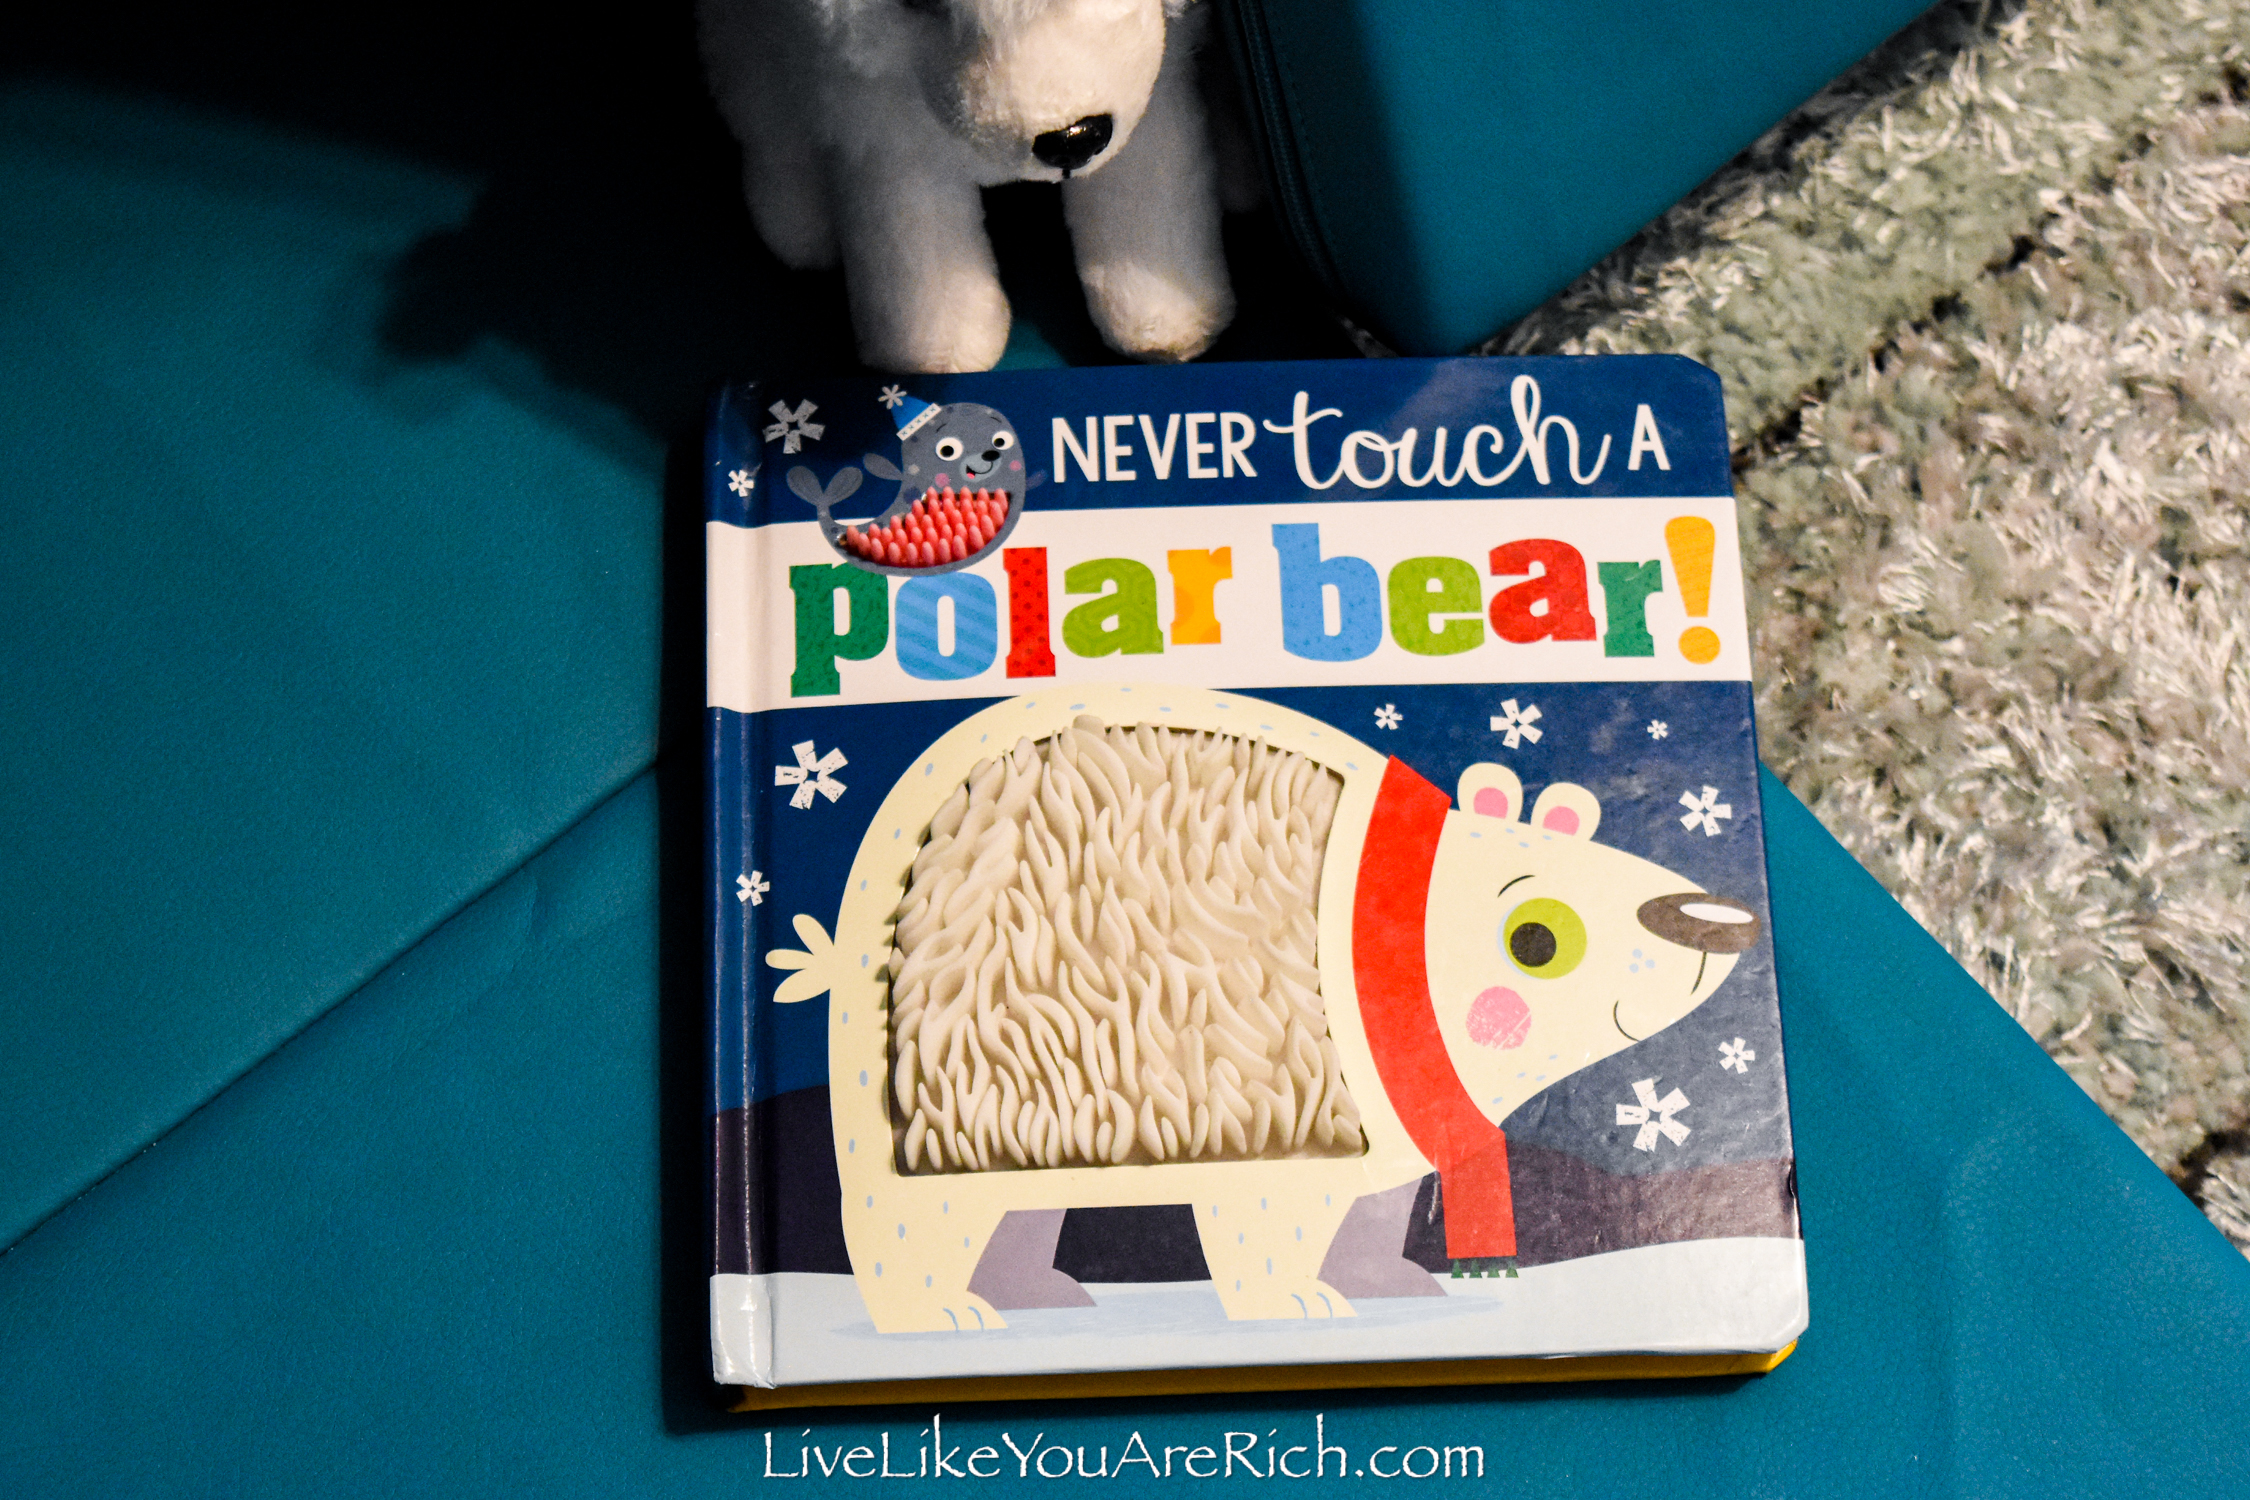 Polar bear book